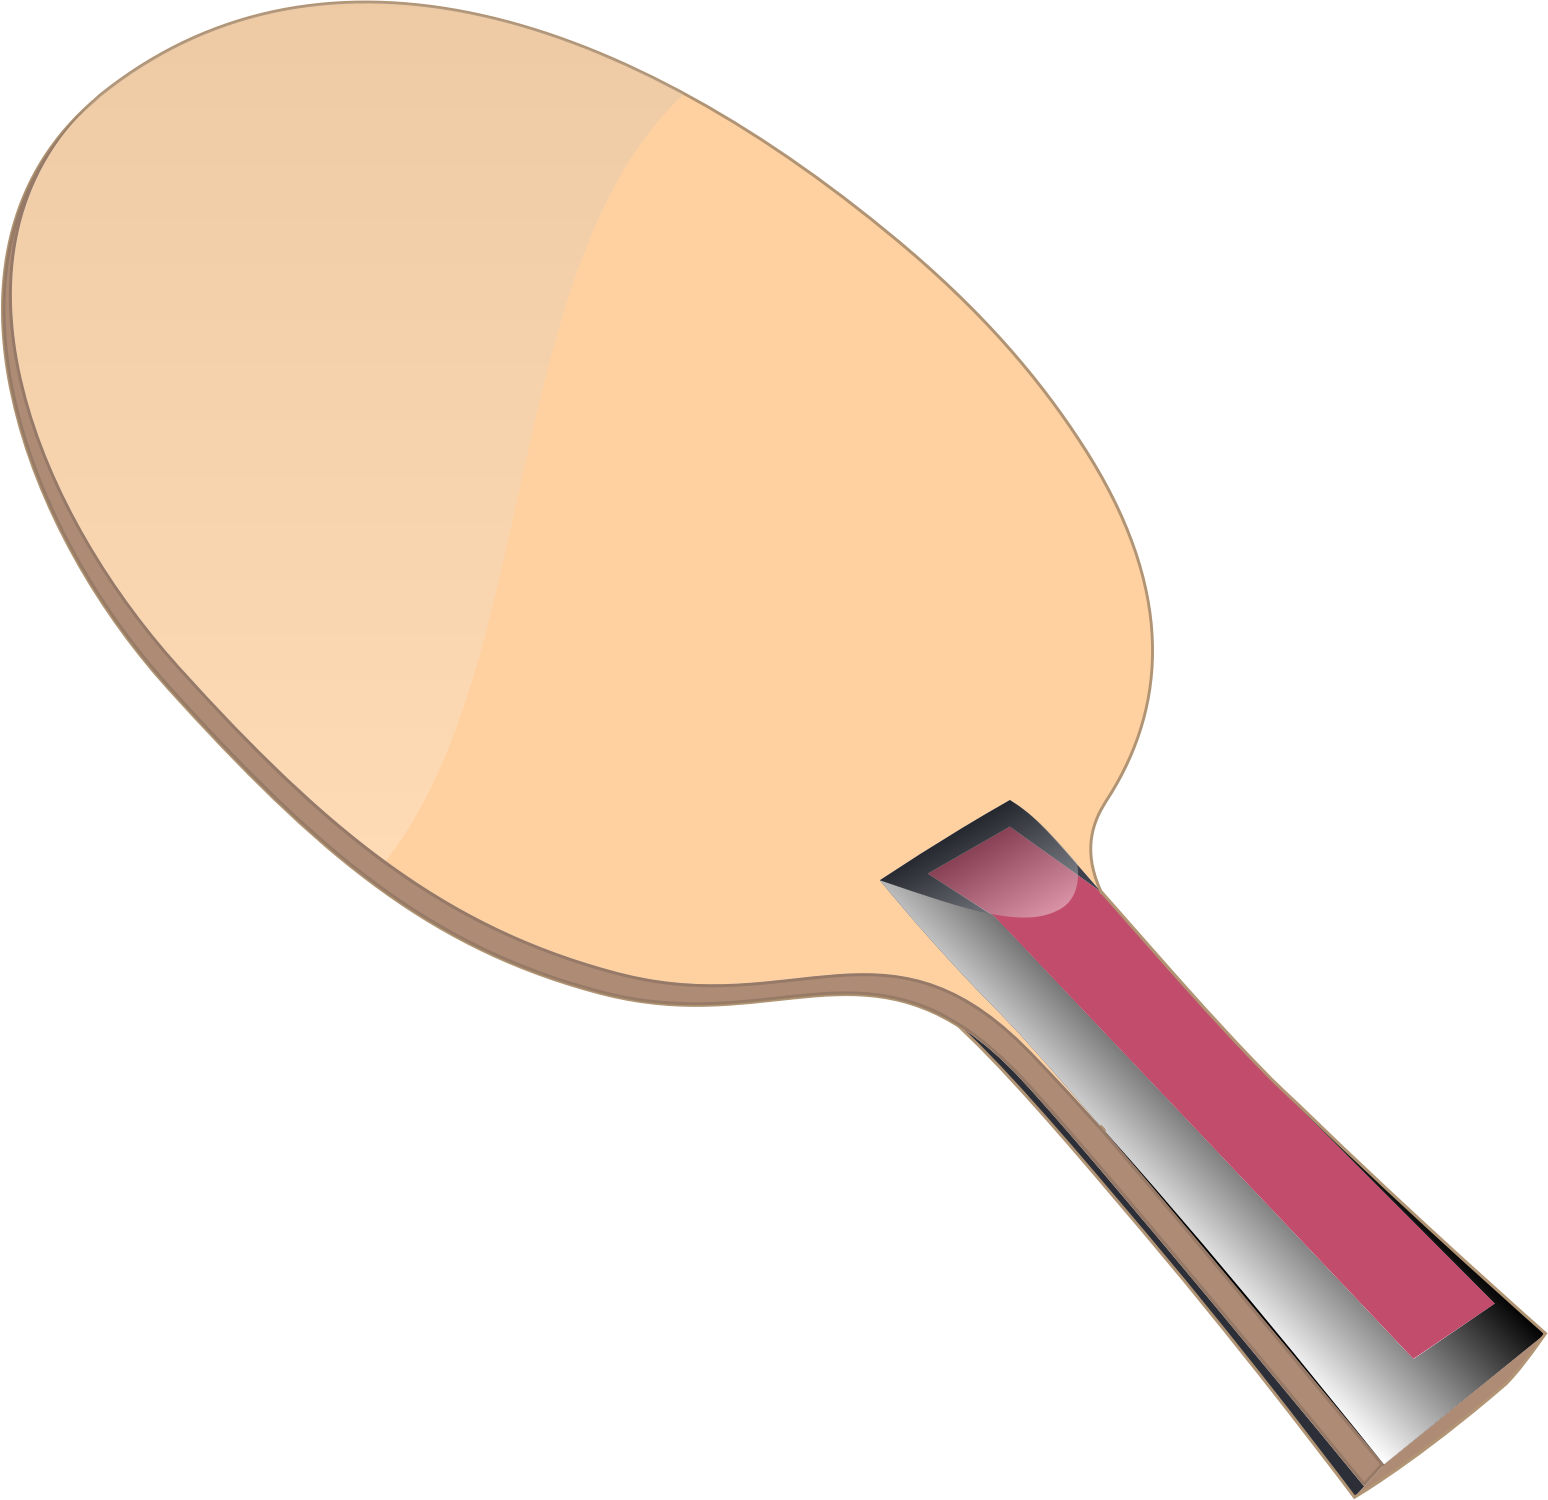 Ping Pong racket PNG image